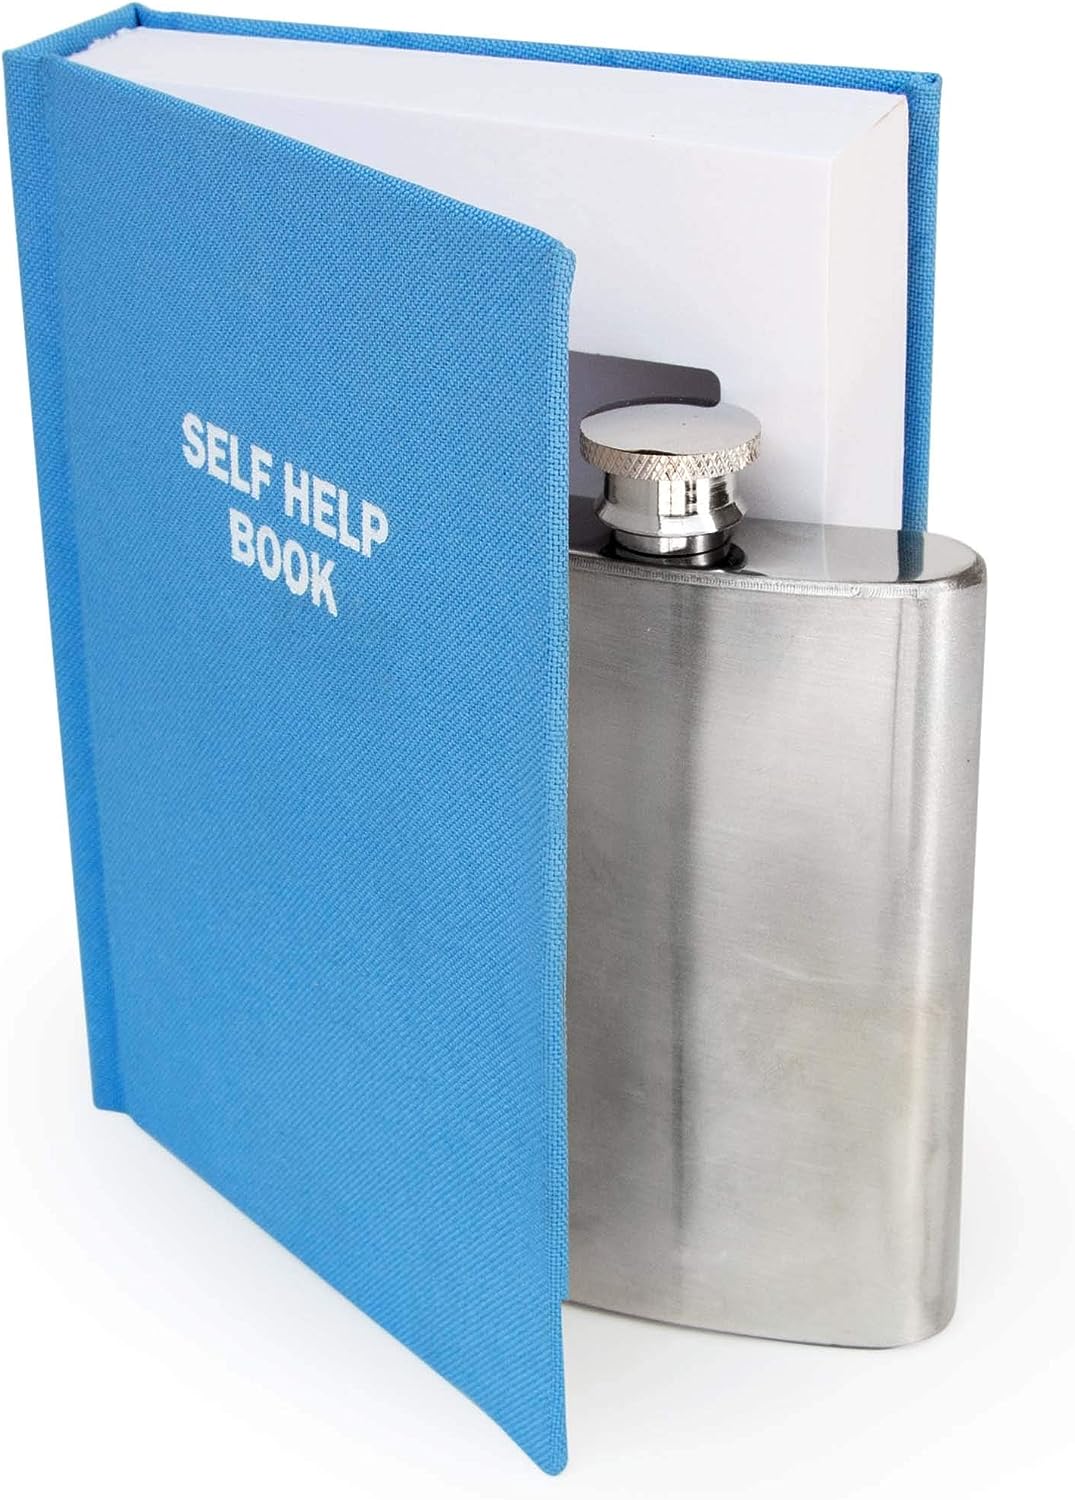 flask-in-a-self-help-book